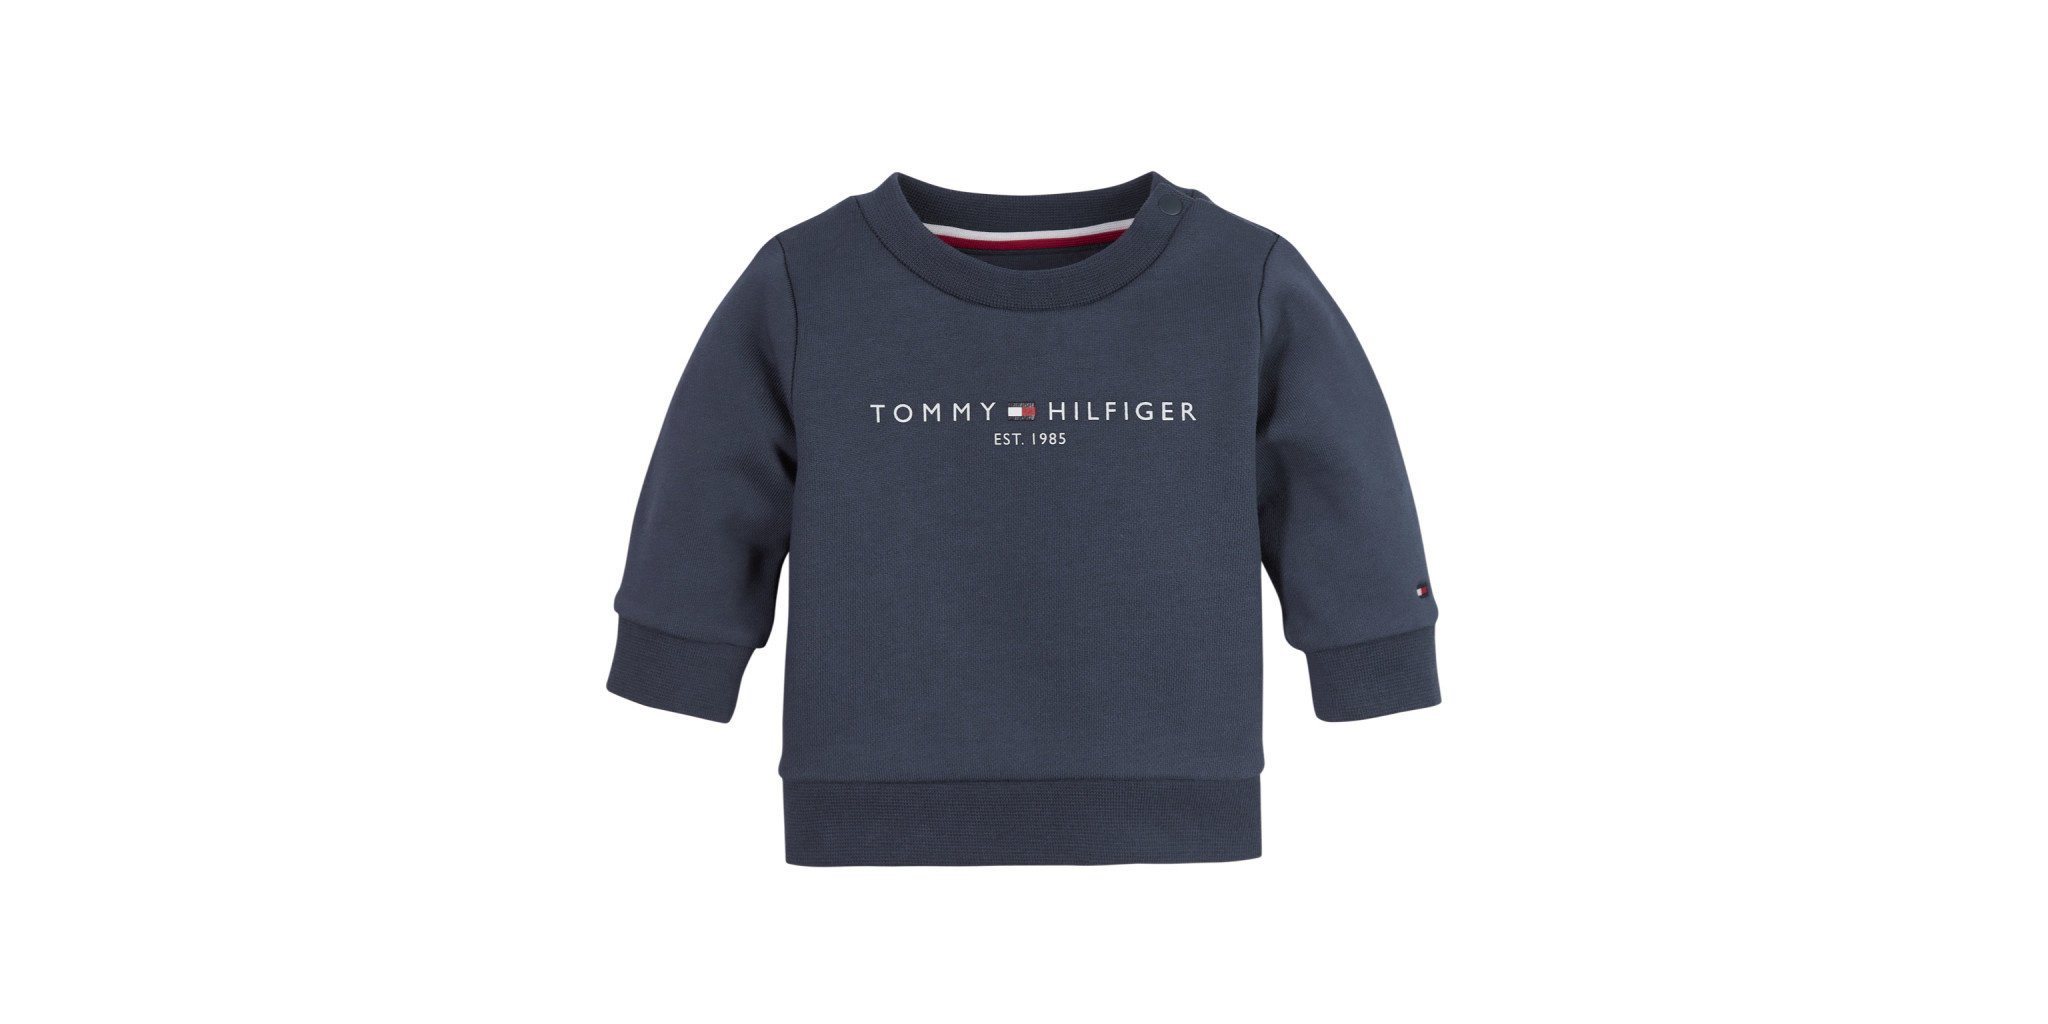 Tommy Hilfiger Tommy Hilfiger KN0KN01279 Sweatshirt Navy S21U